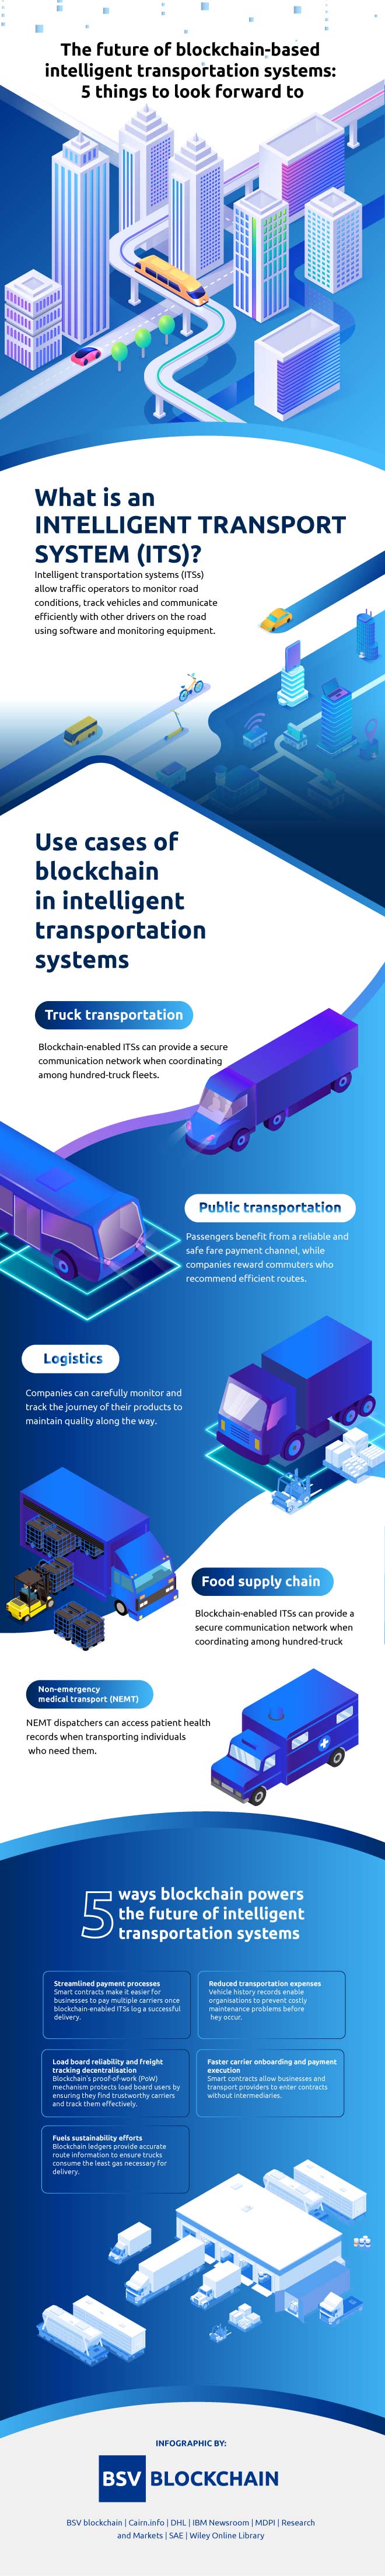 The future of blockchain-based intelligent transportation systems